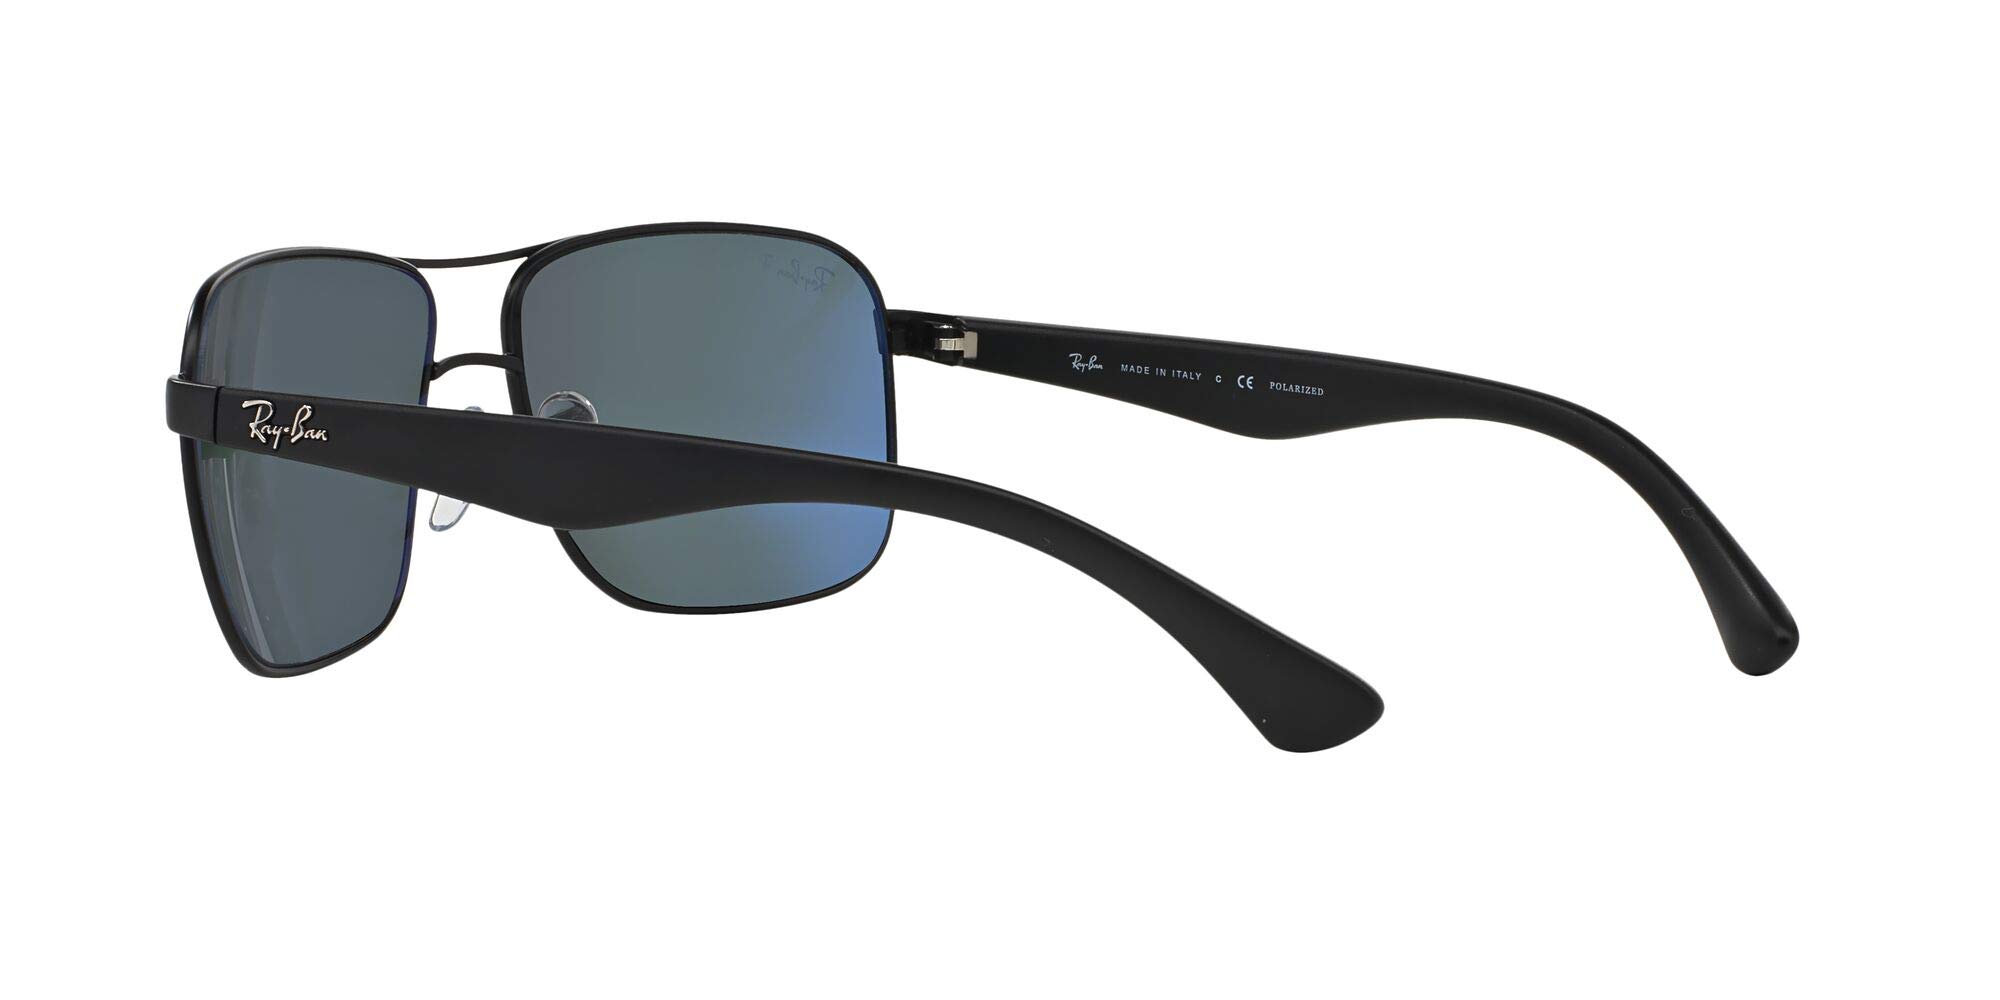 Ray-Ban Men's Rb3516 Metal Square Sunglasses